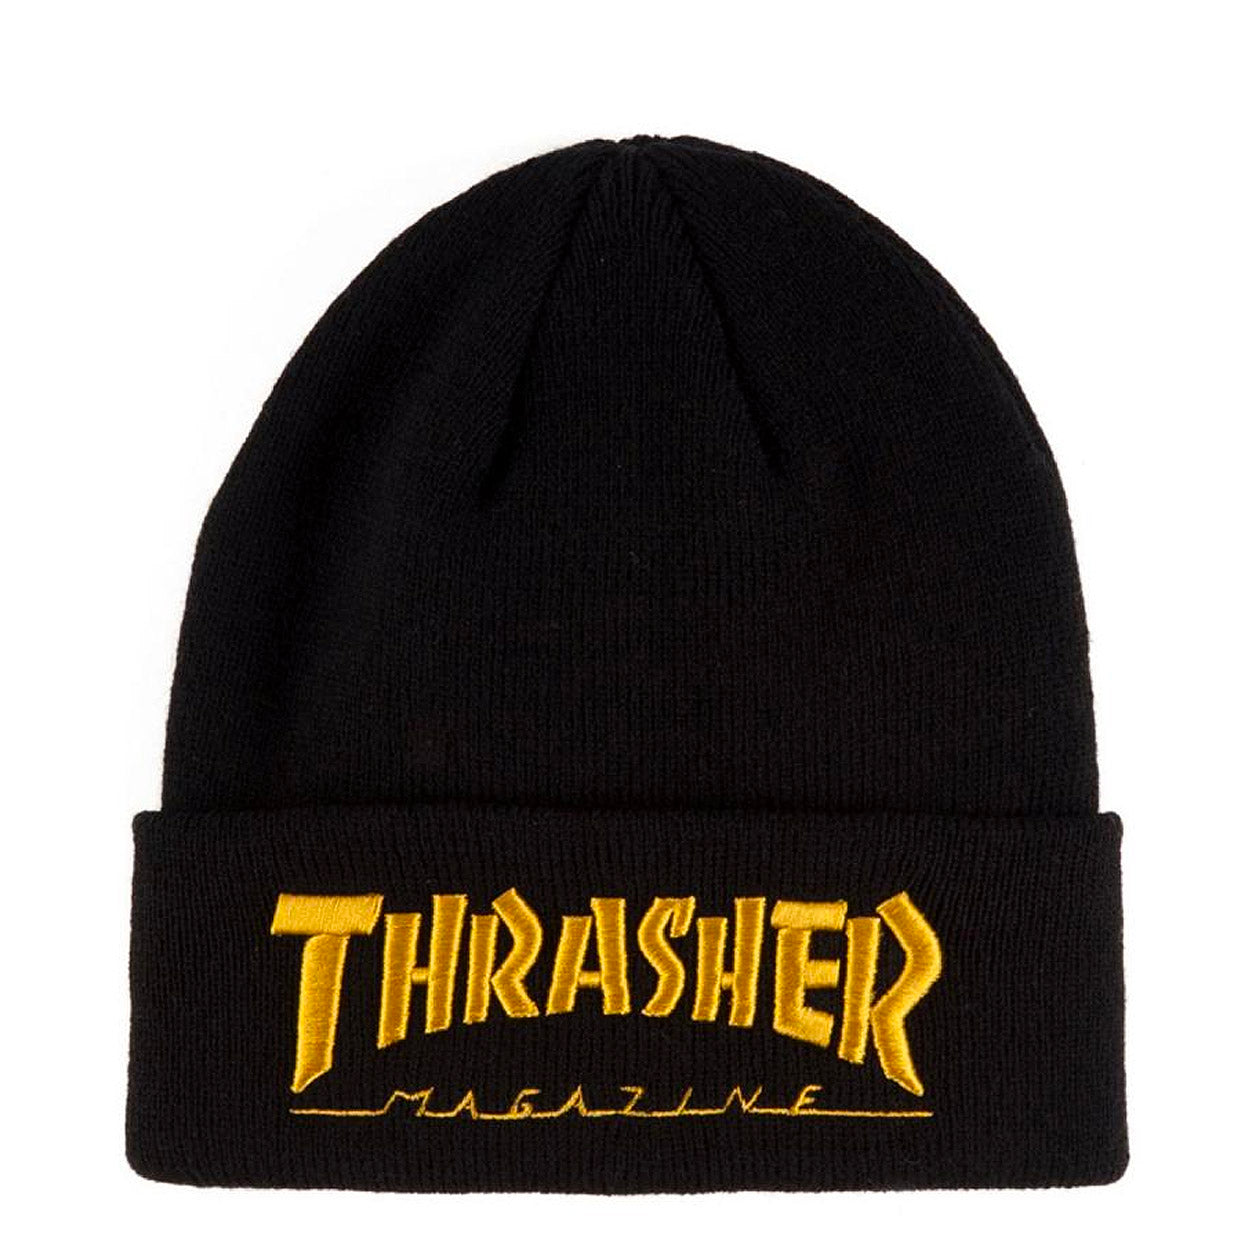 Thrasher Embroidered Logo Beanie - Black / Gold - Prime Delux Store